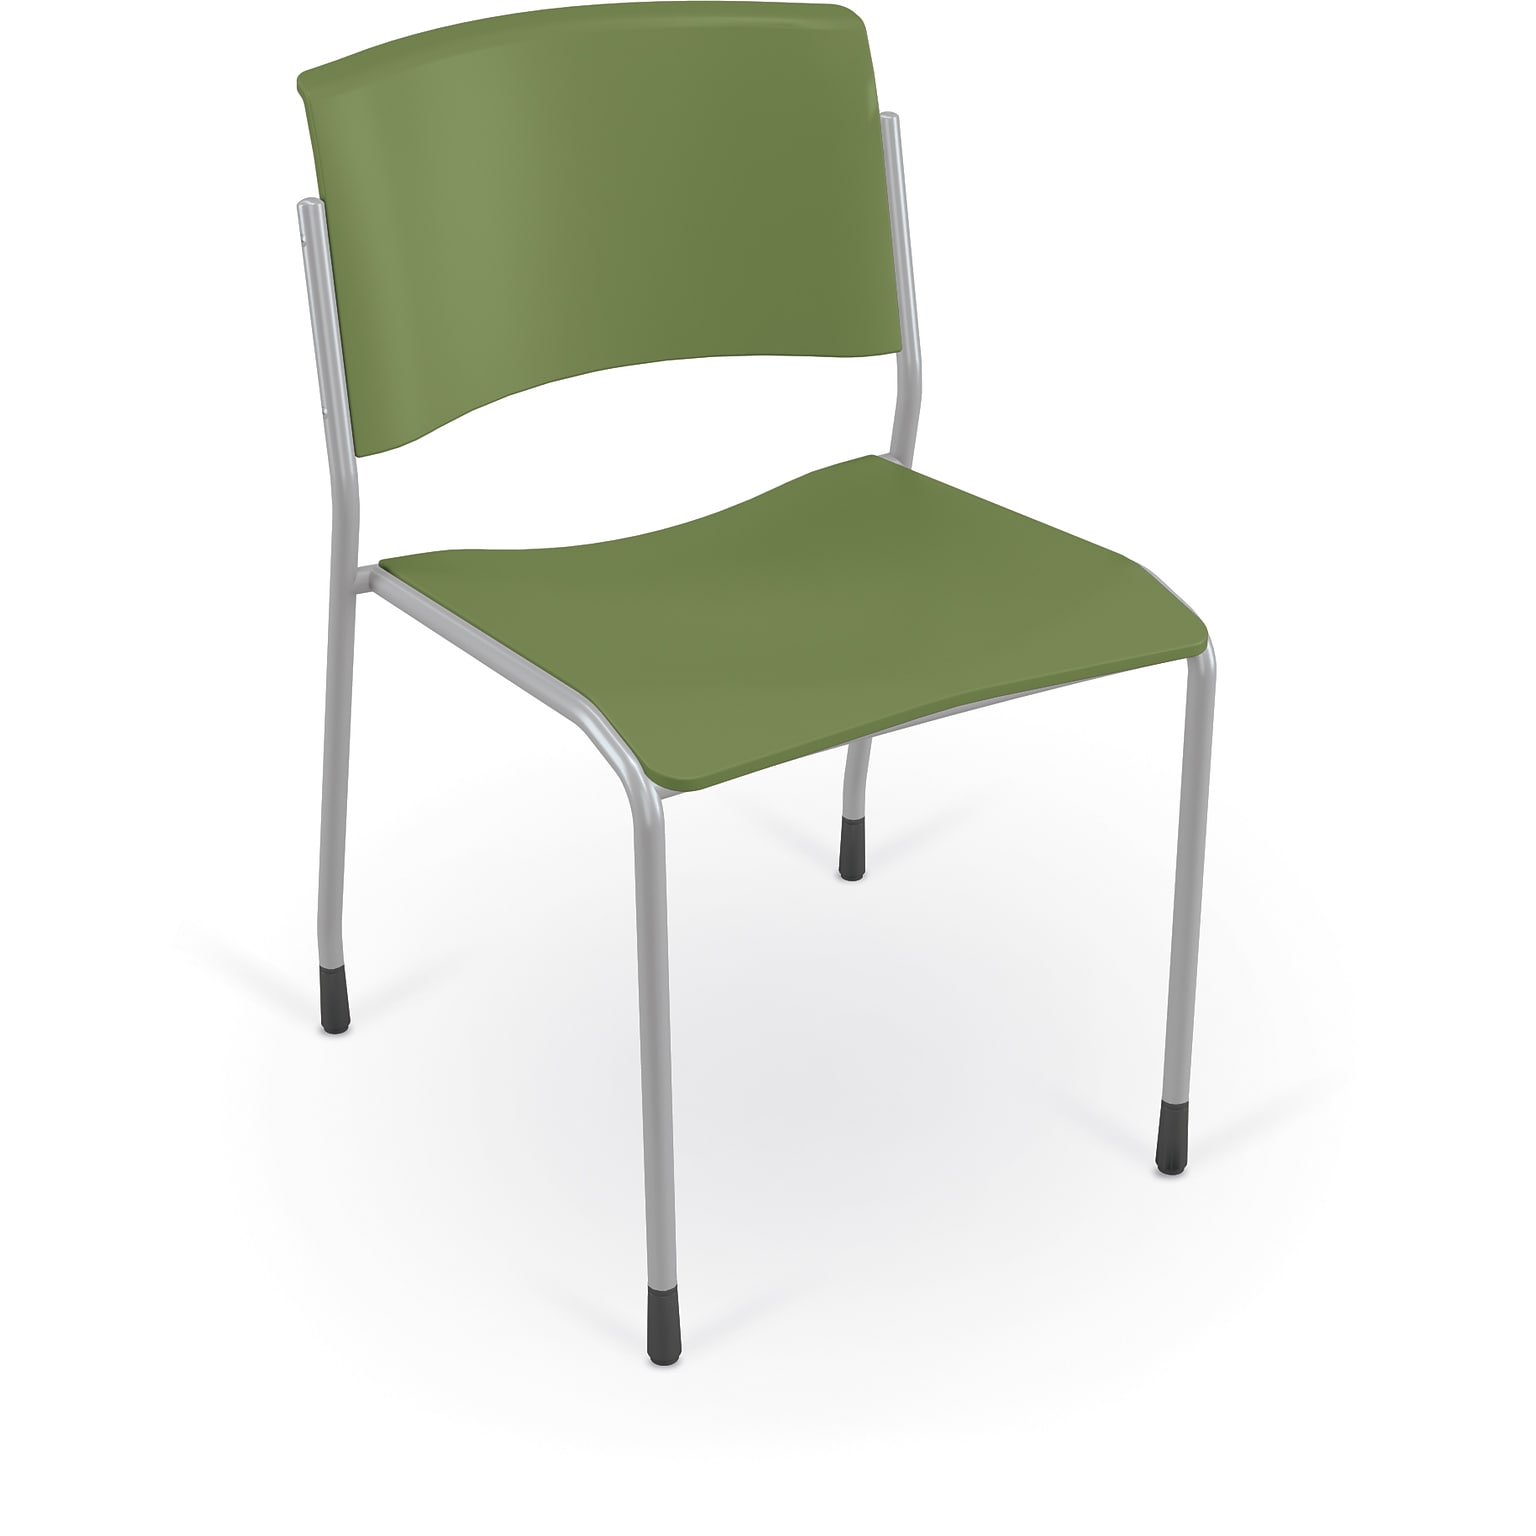 MooreCo Akt 4-Leg Student Chair, Moss (56579-GL-MOSS)